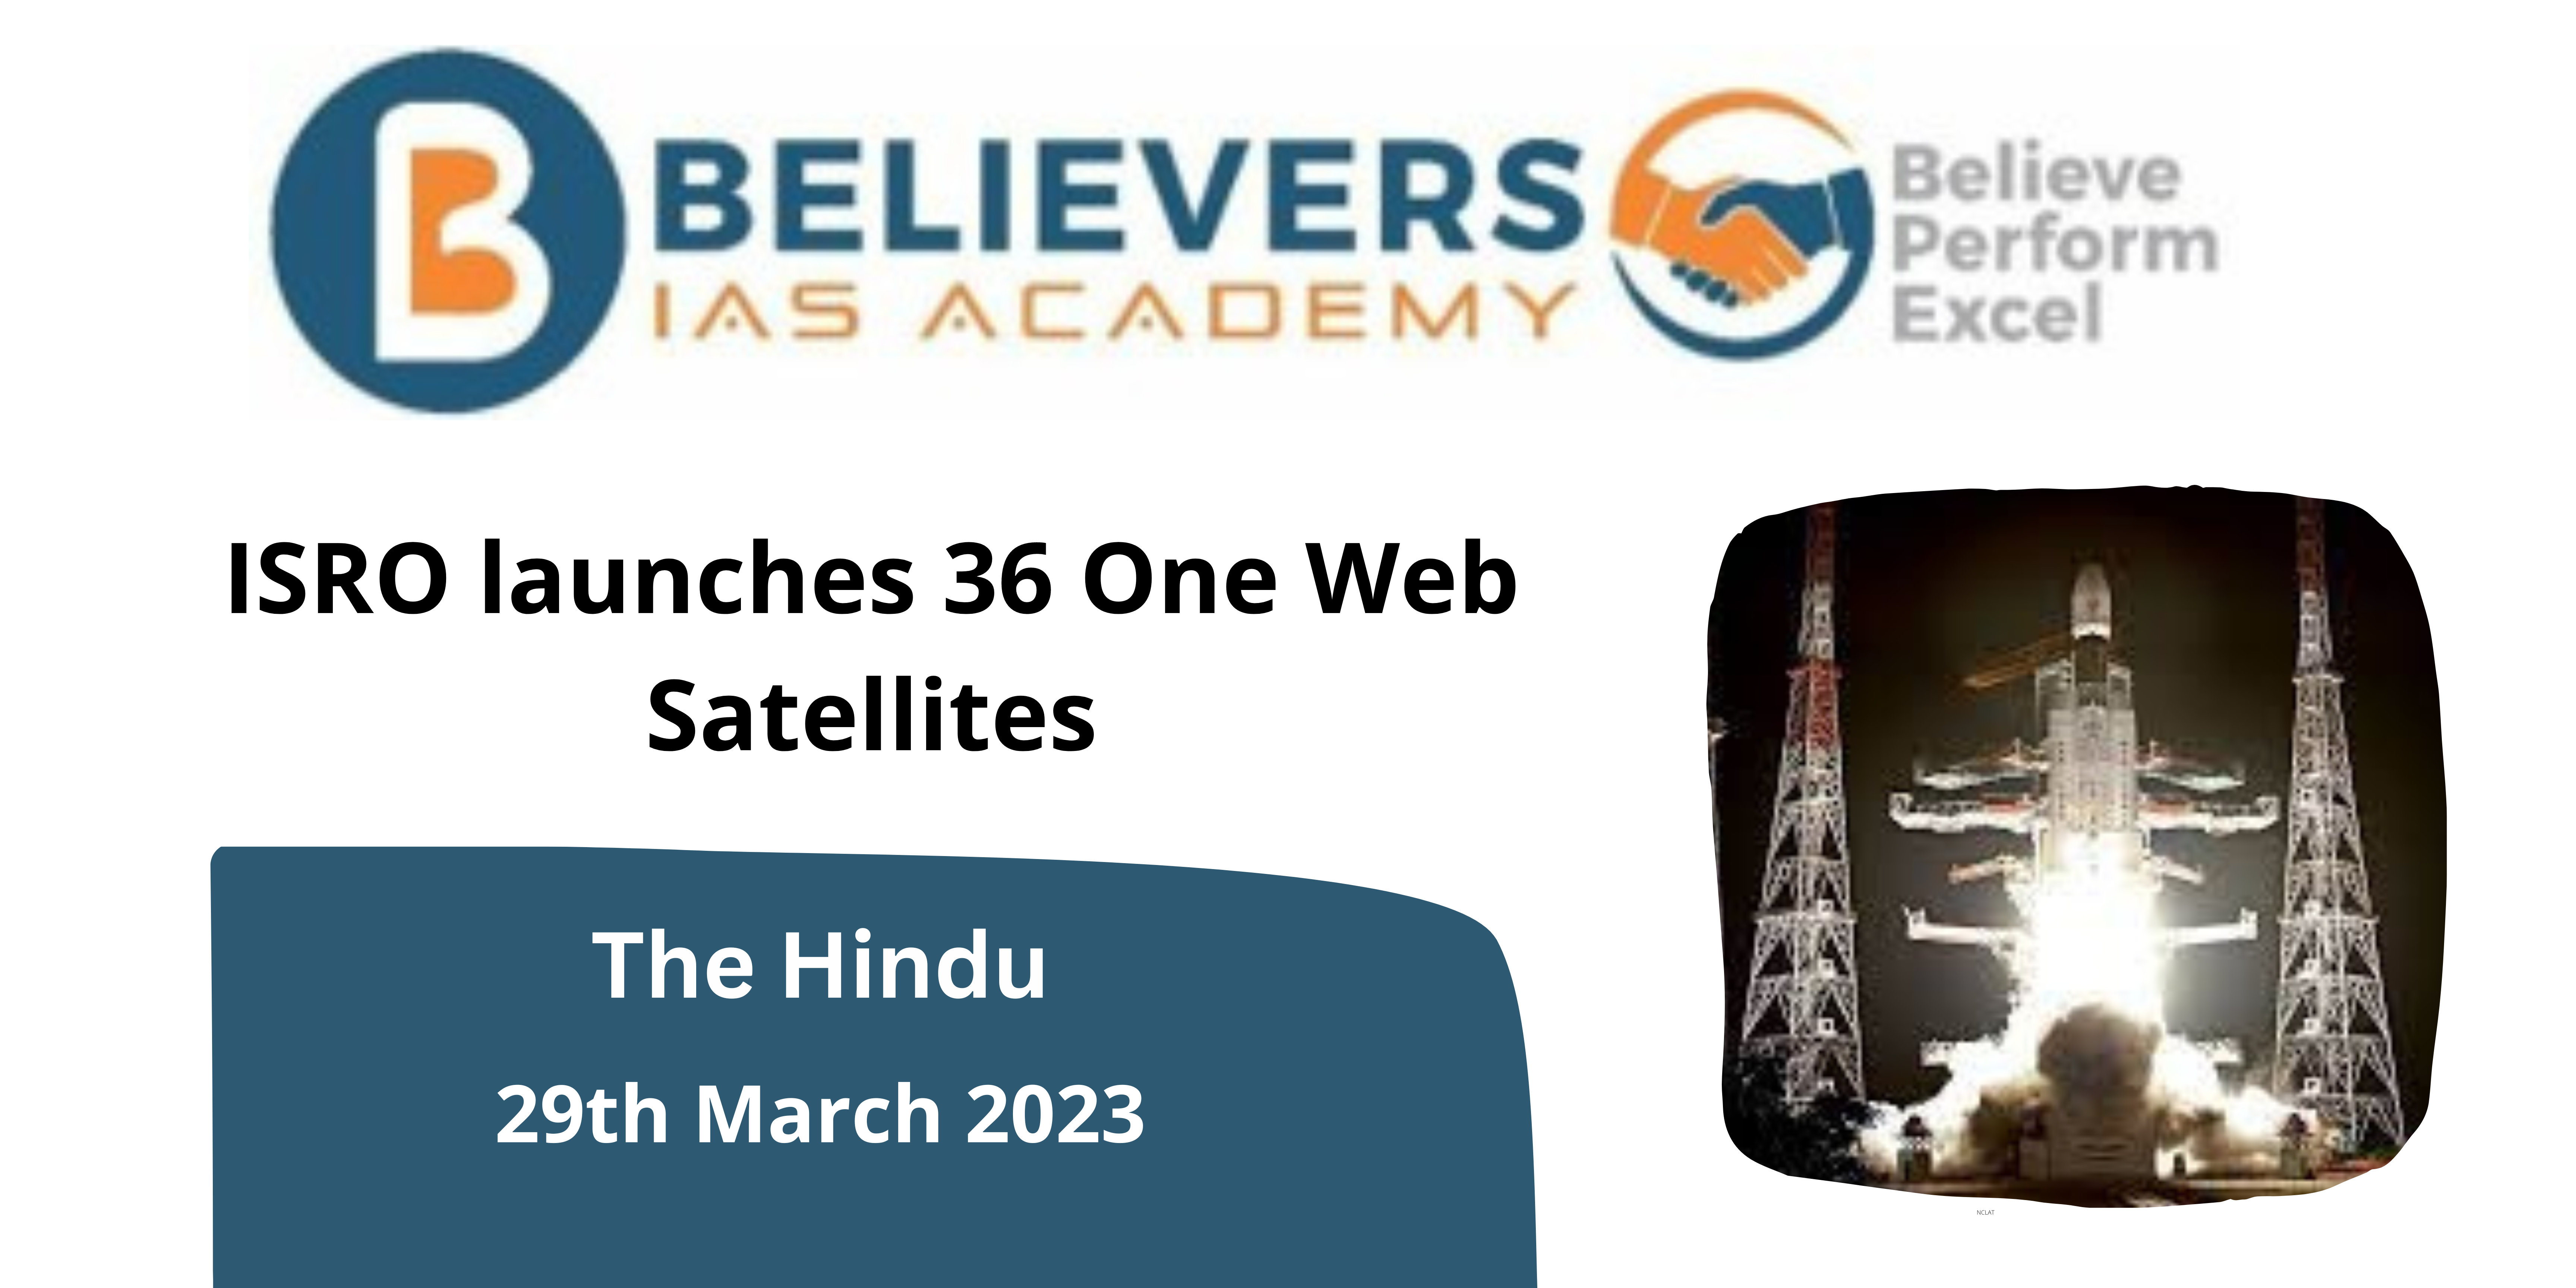 ISRO launches 36 One Web Satellites